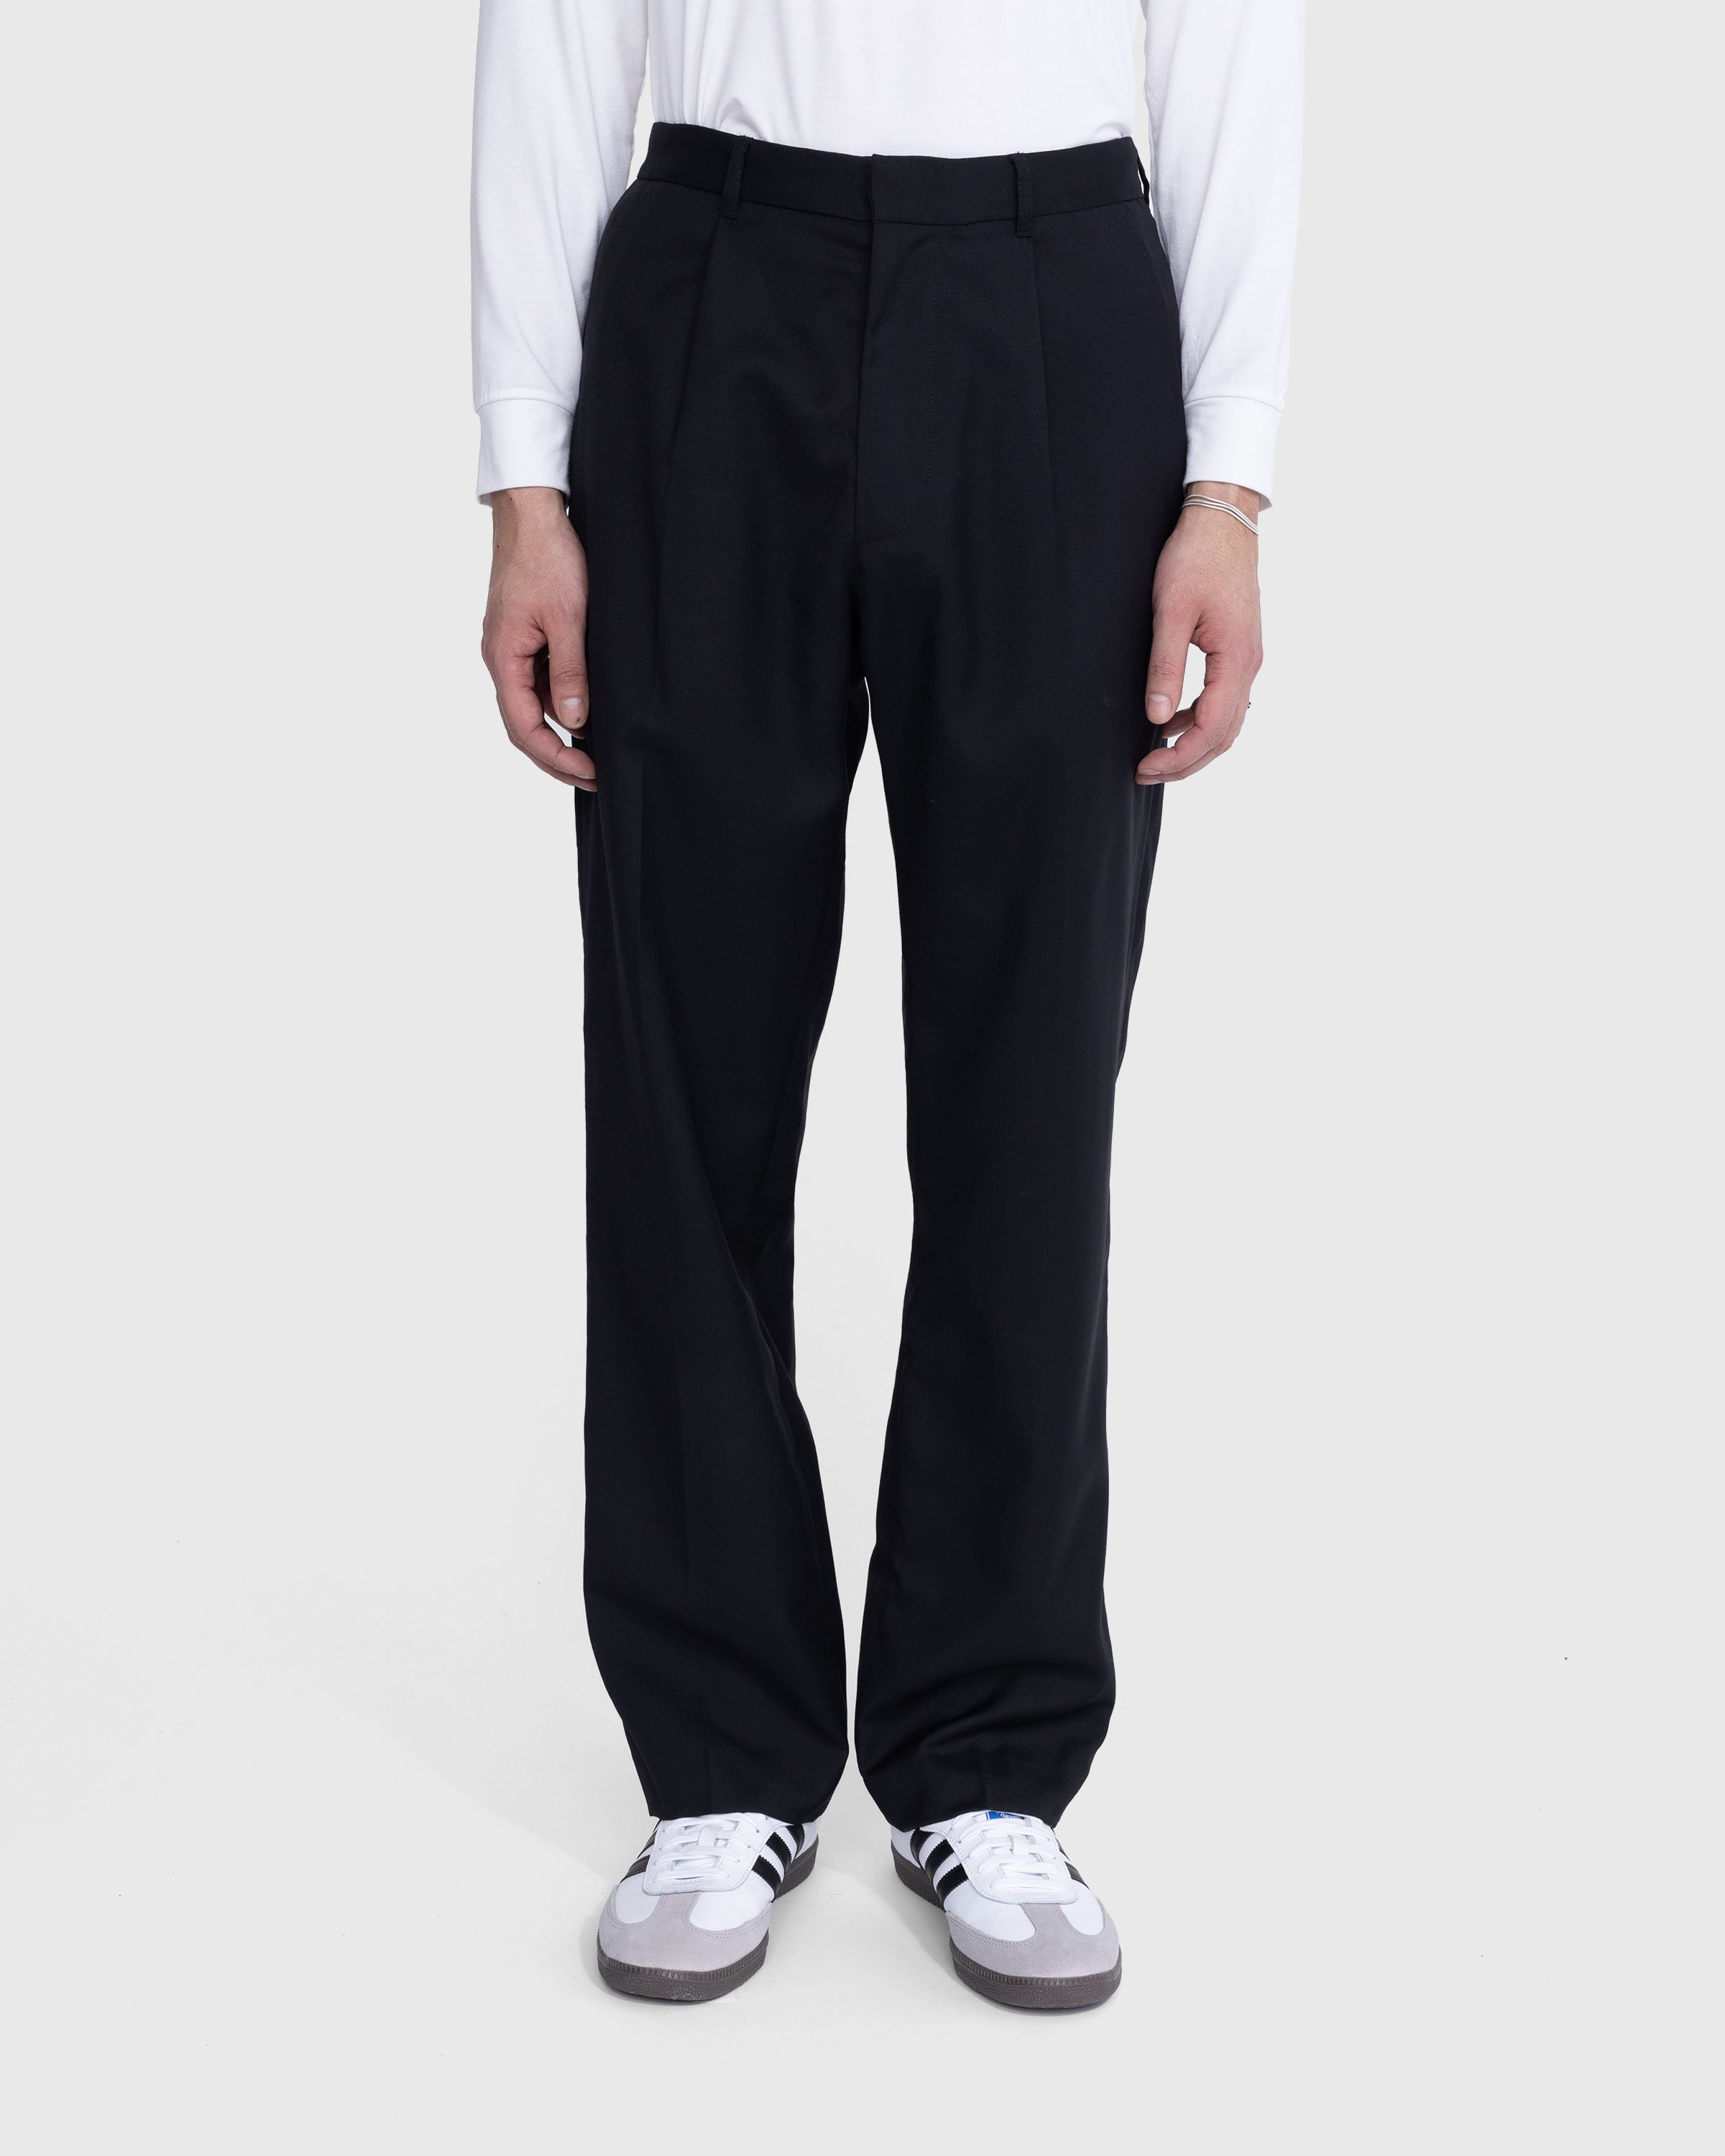 Highsnobiety - Tropical Wool Suiting Pants Black - Clothing - Black - Image 2